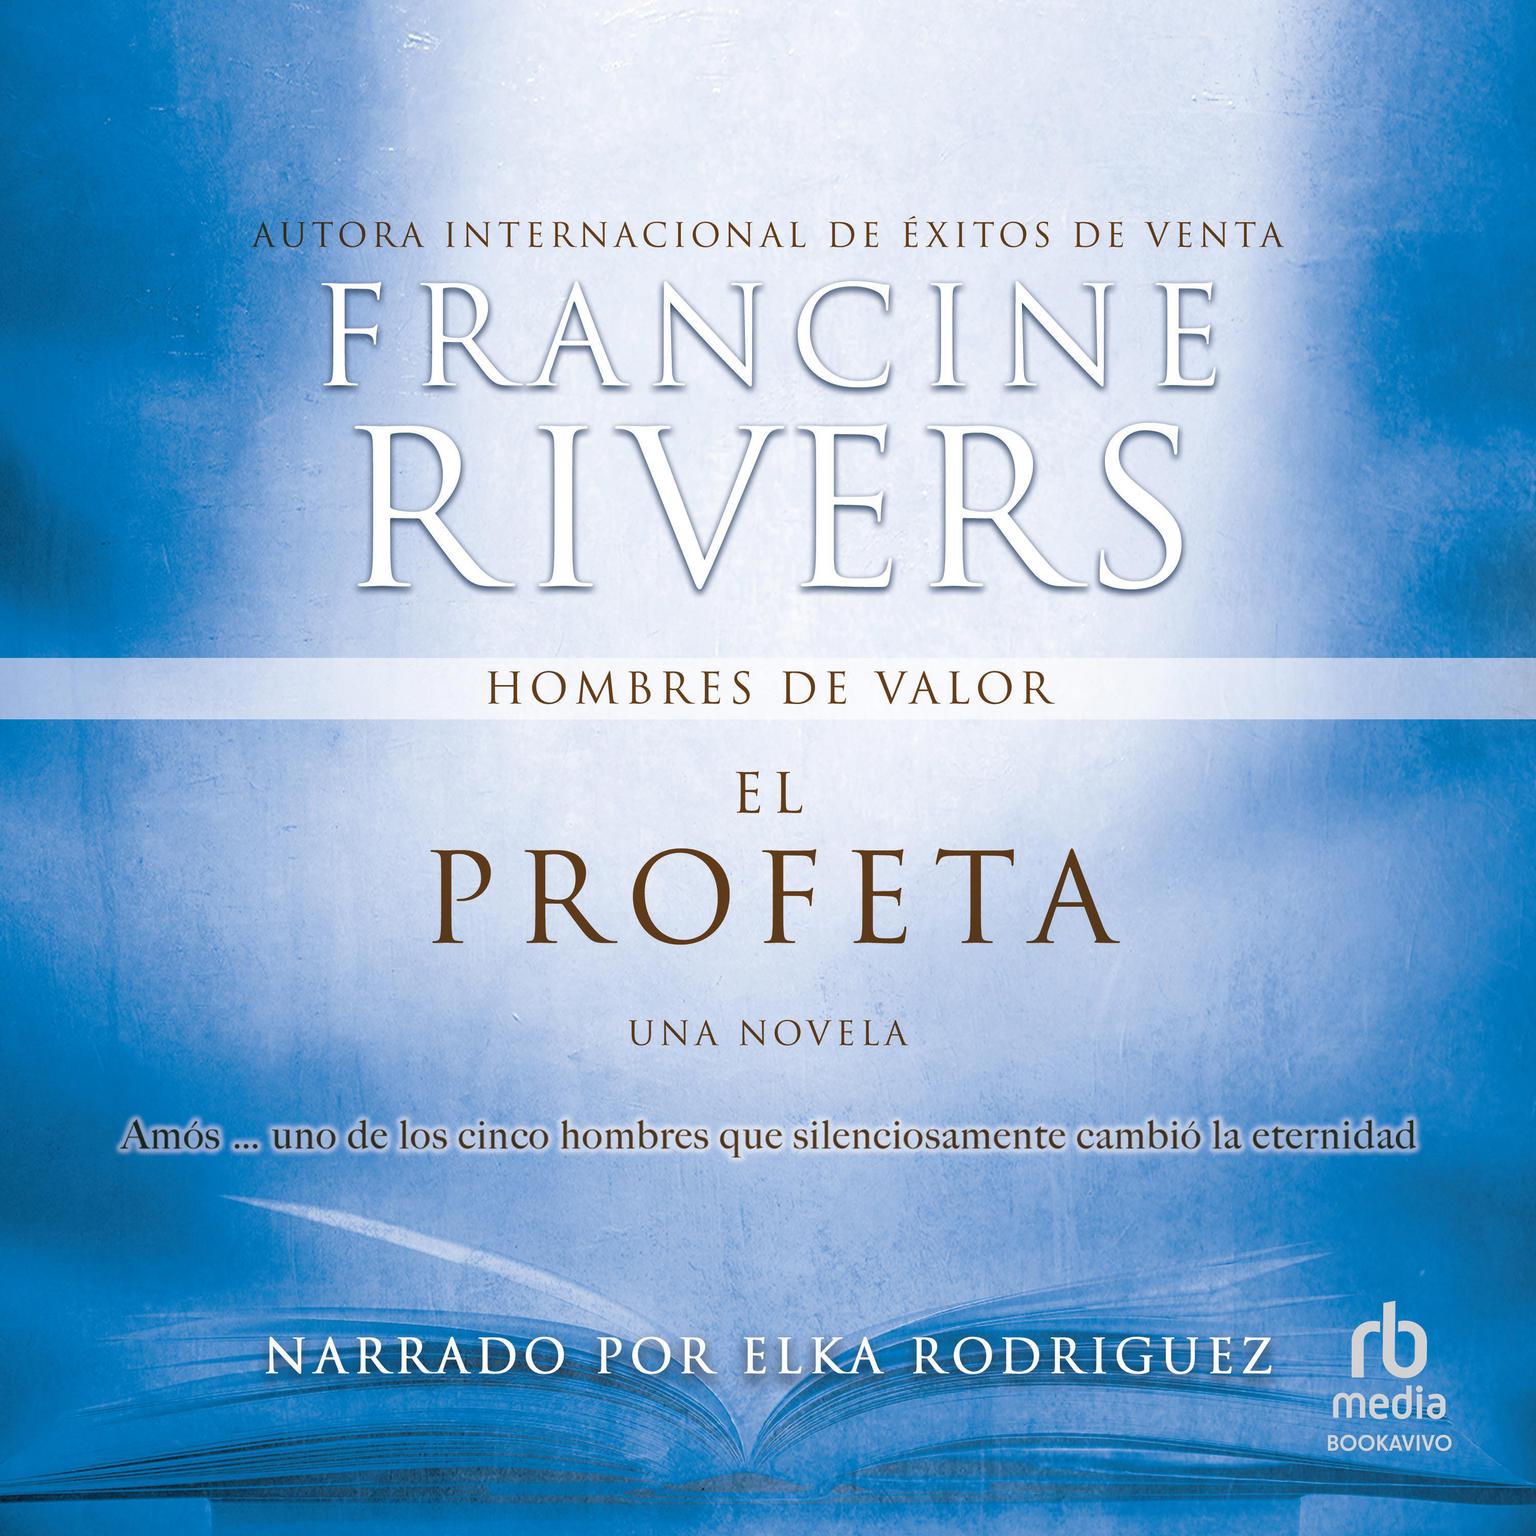 El profeta: Amos Audiobook, by Francine Rivers